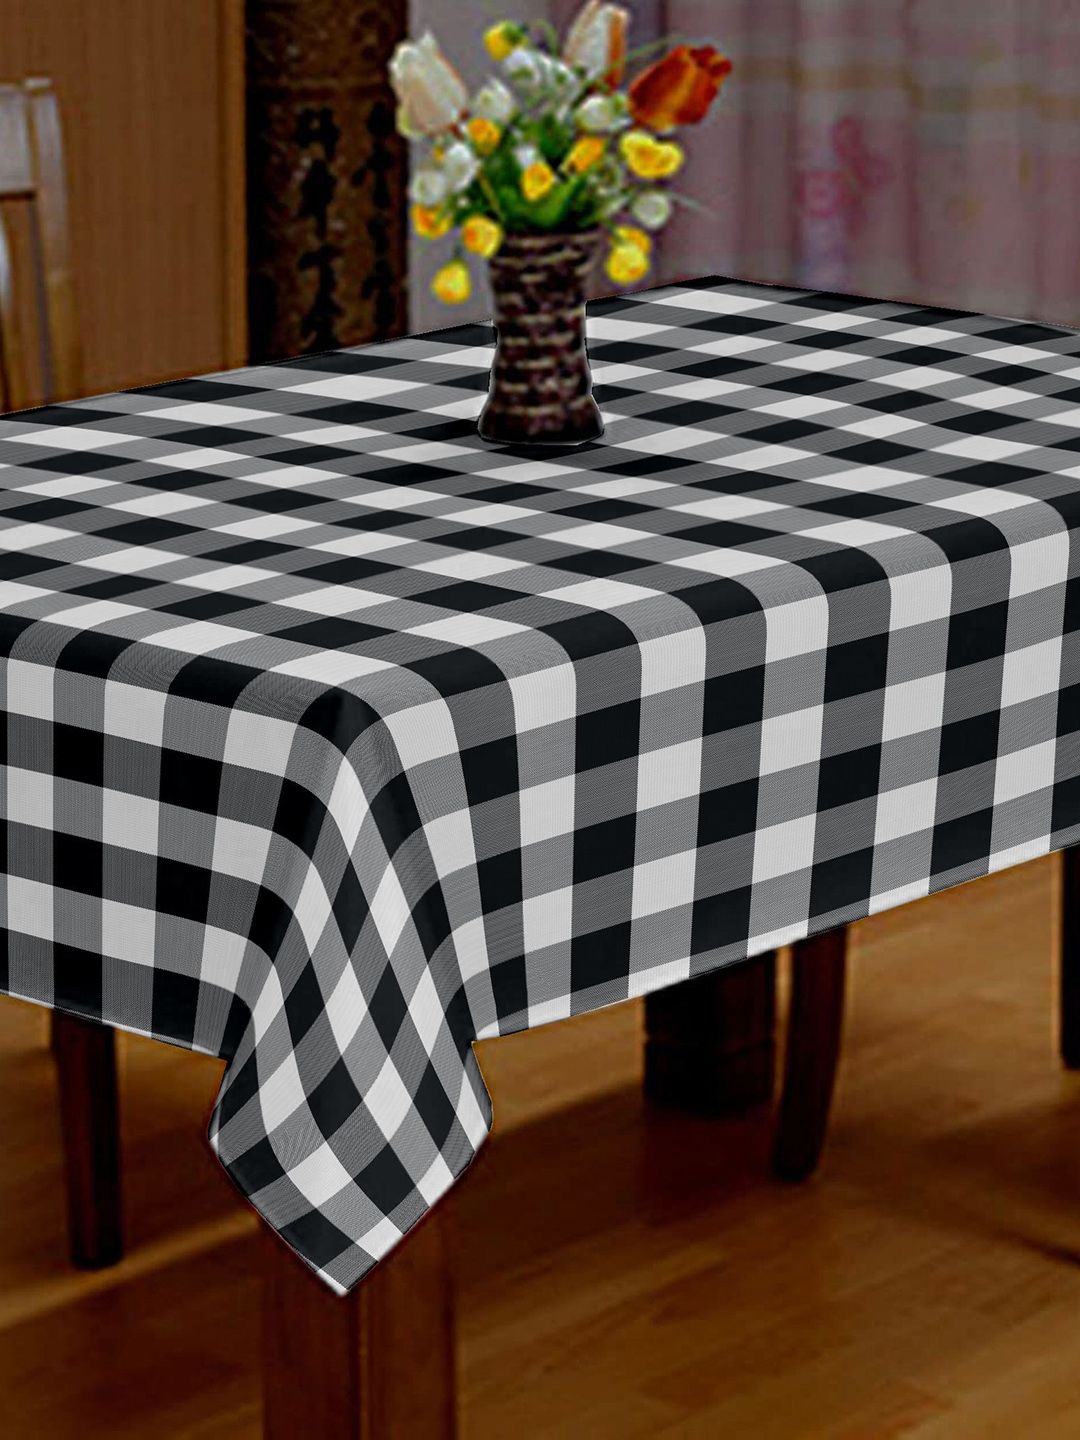 Lushomes Black Buffalo Checks Plaid Square Table Cover Cloth Price in India